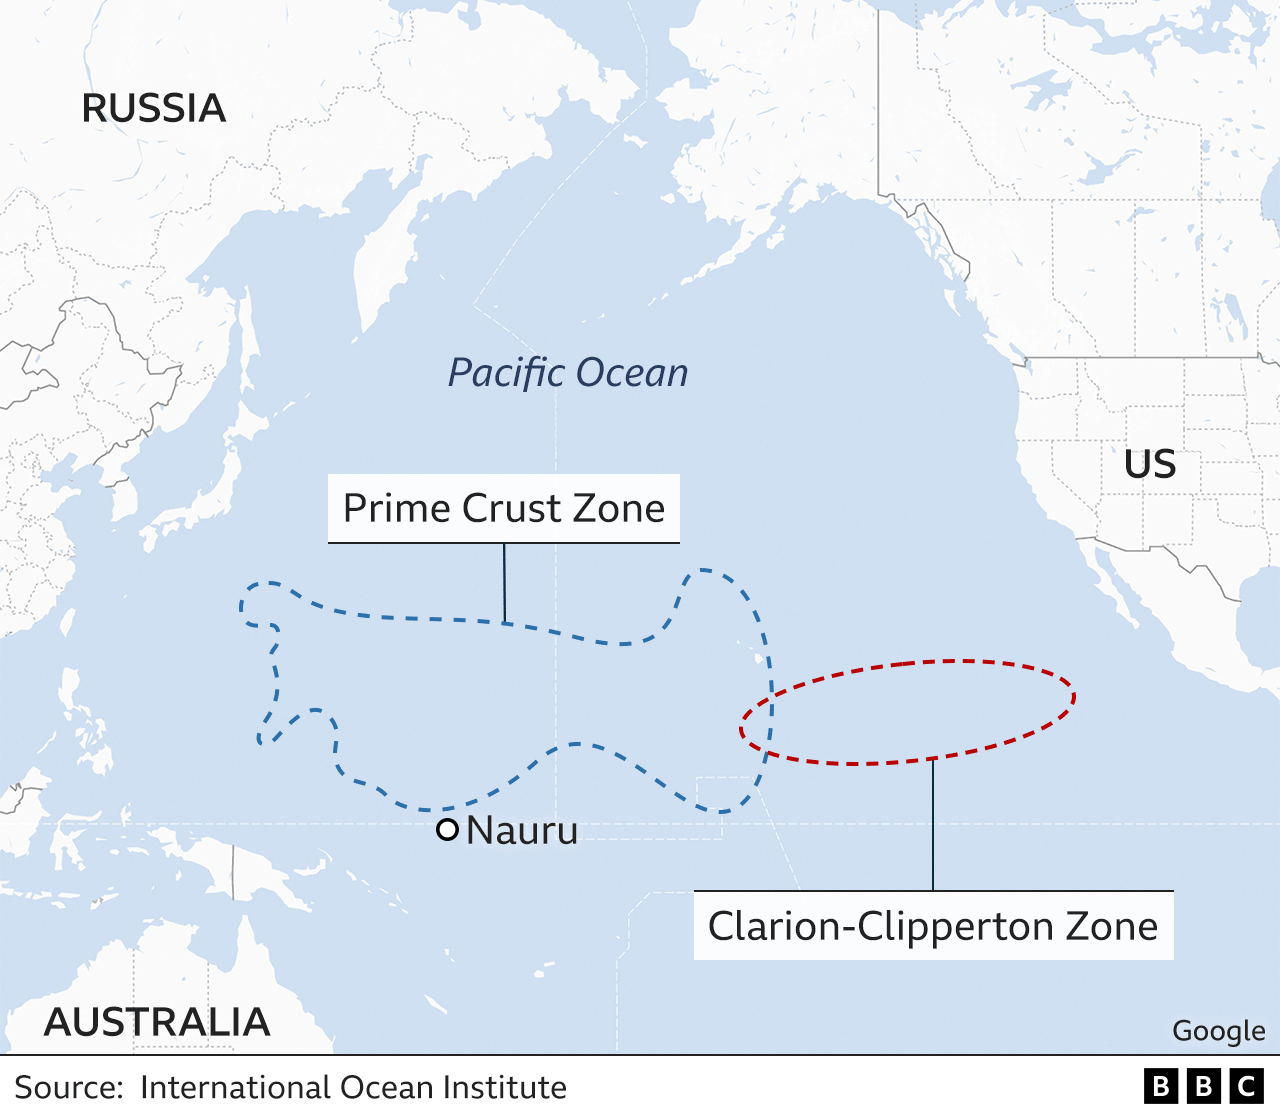 Map marking the island or Nauru and the key areas for deep sea mining